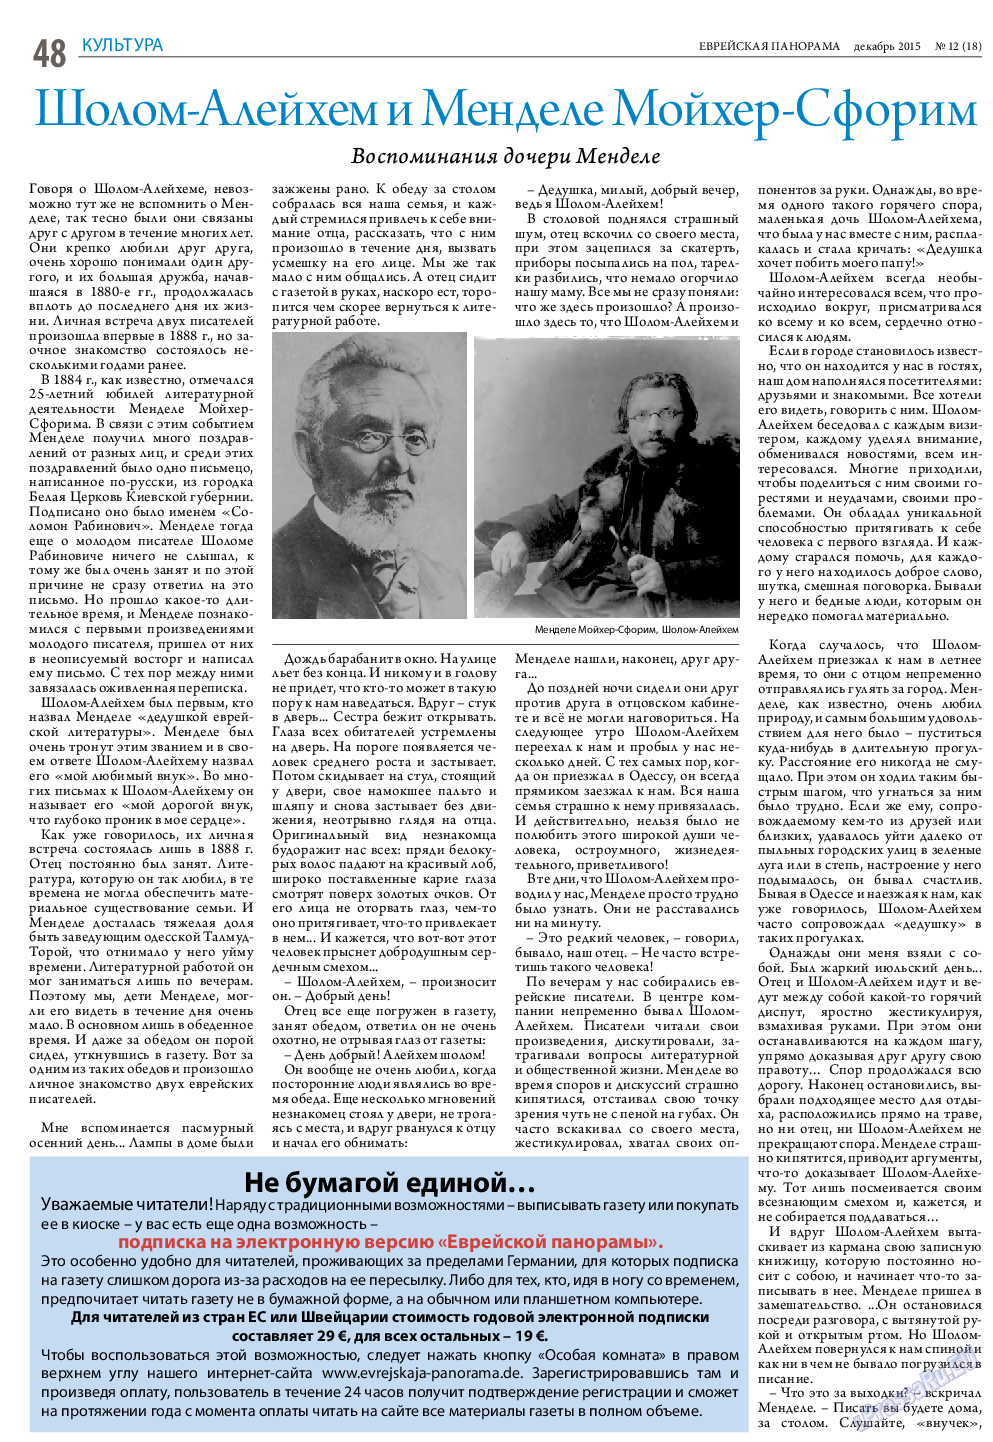 Еврейская панорама, газета. 2015 №12 стр.48